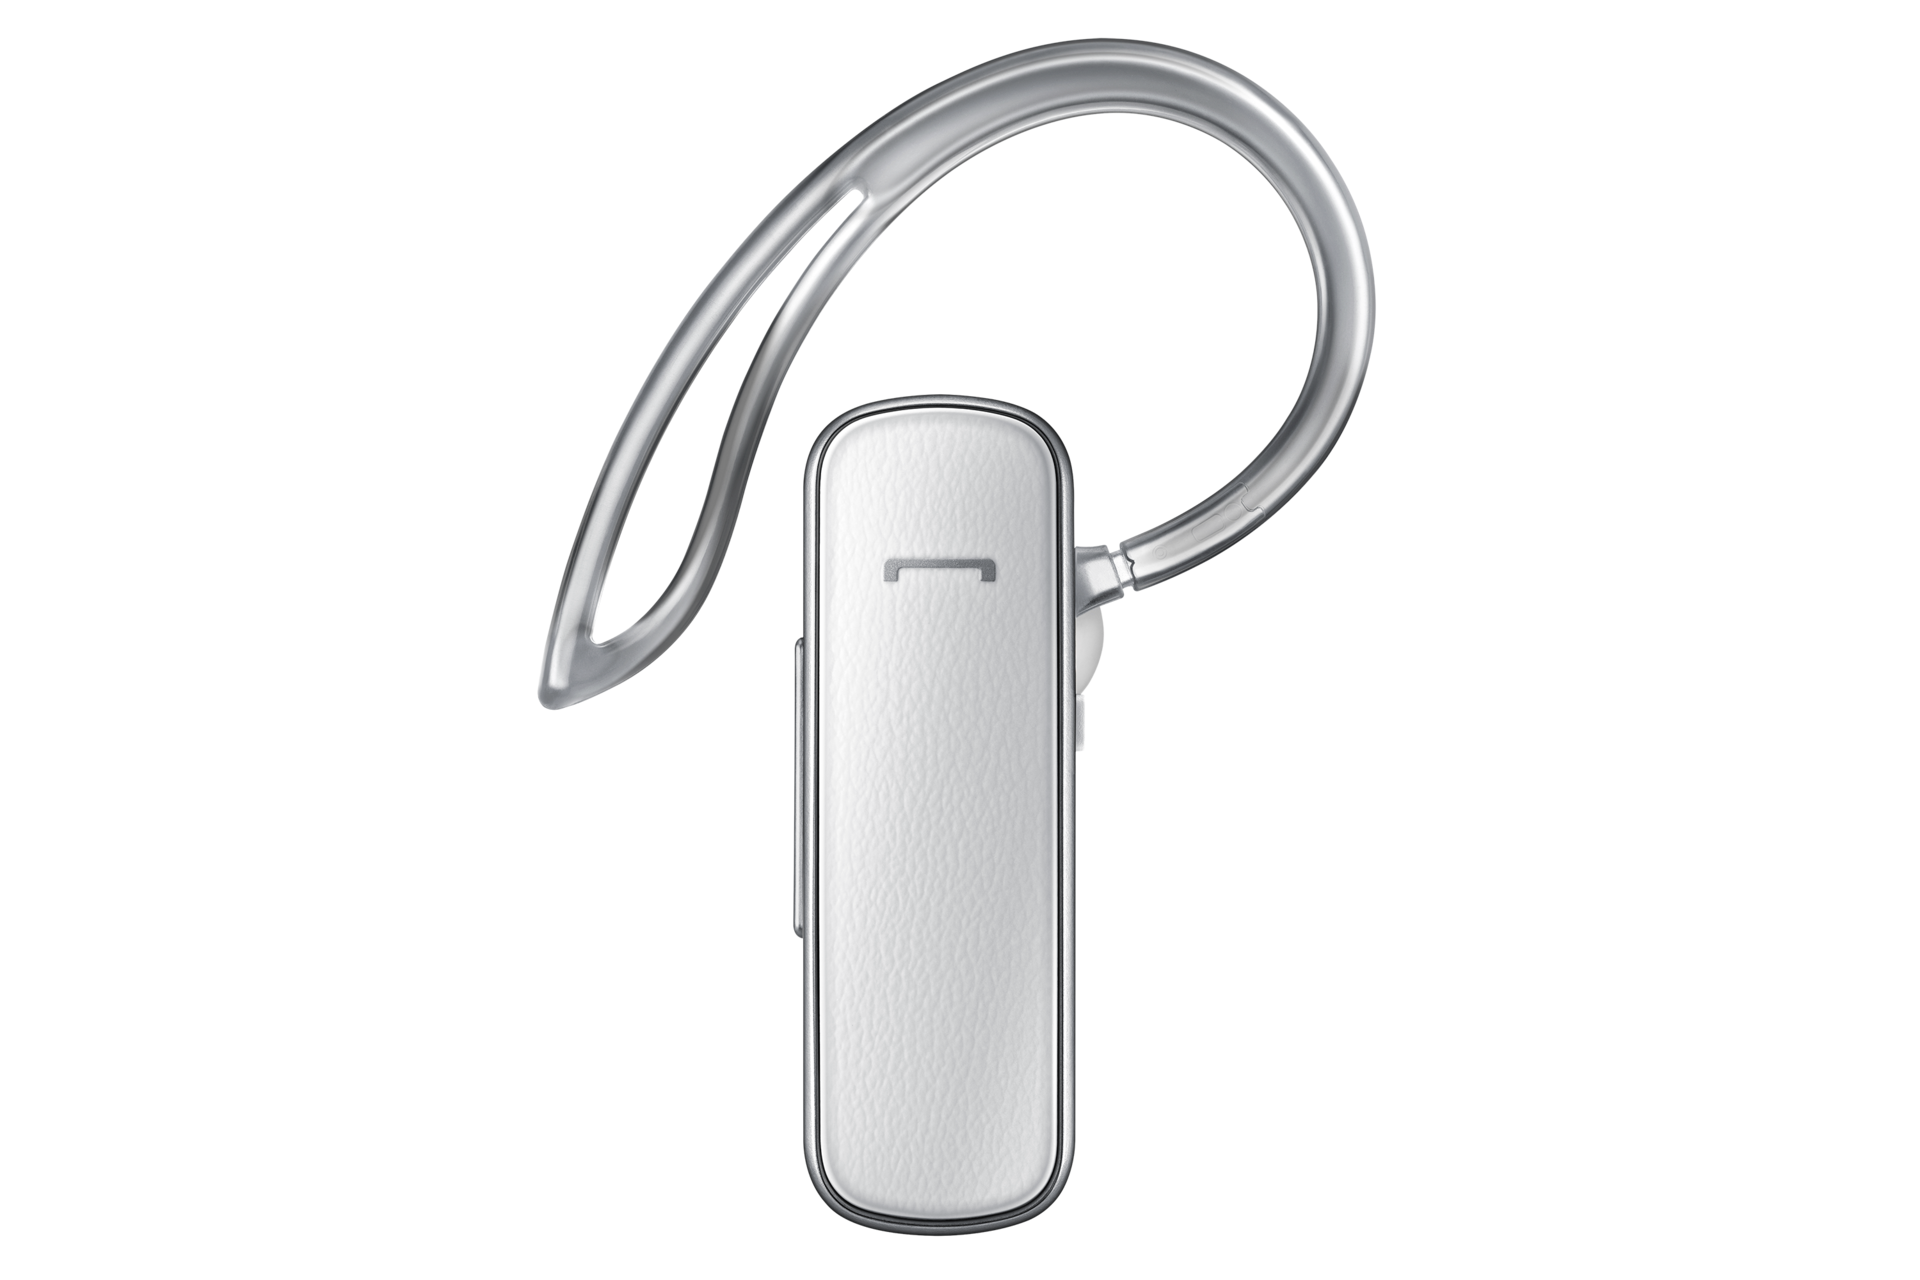 Samsung Bluetooth Headphone Mg900 White Price In Malaysia